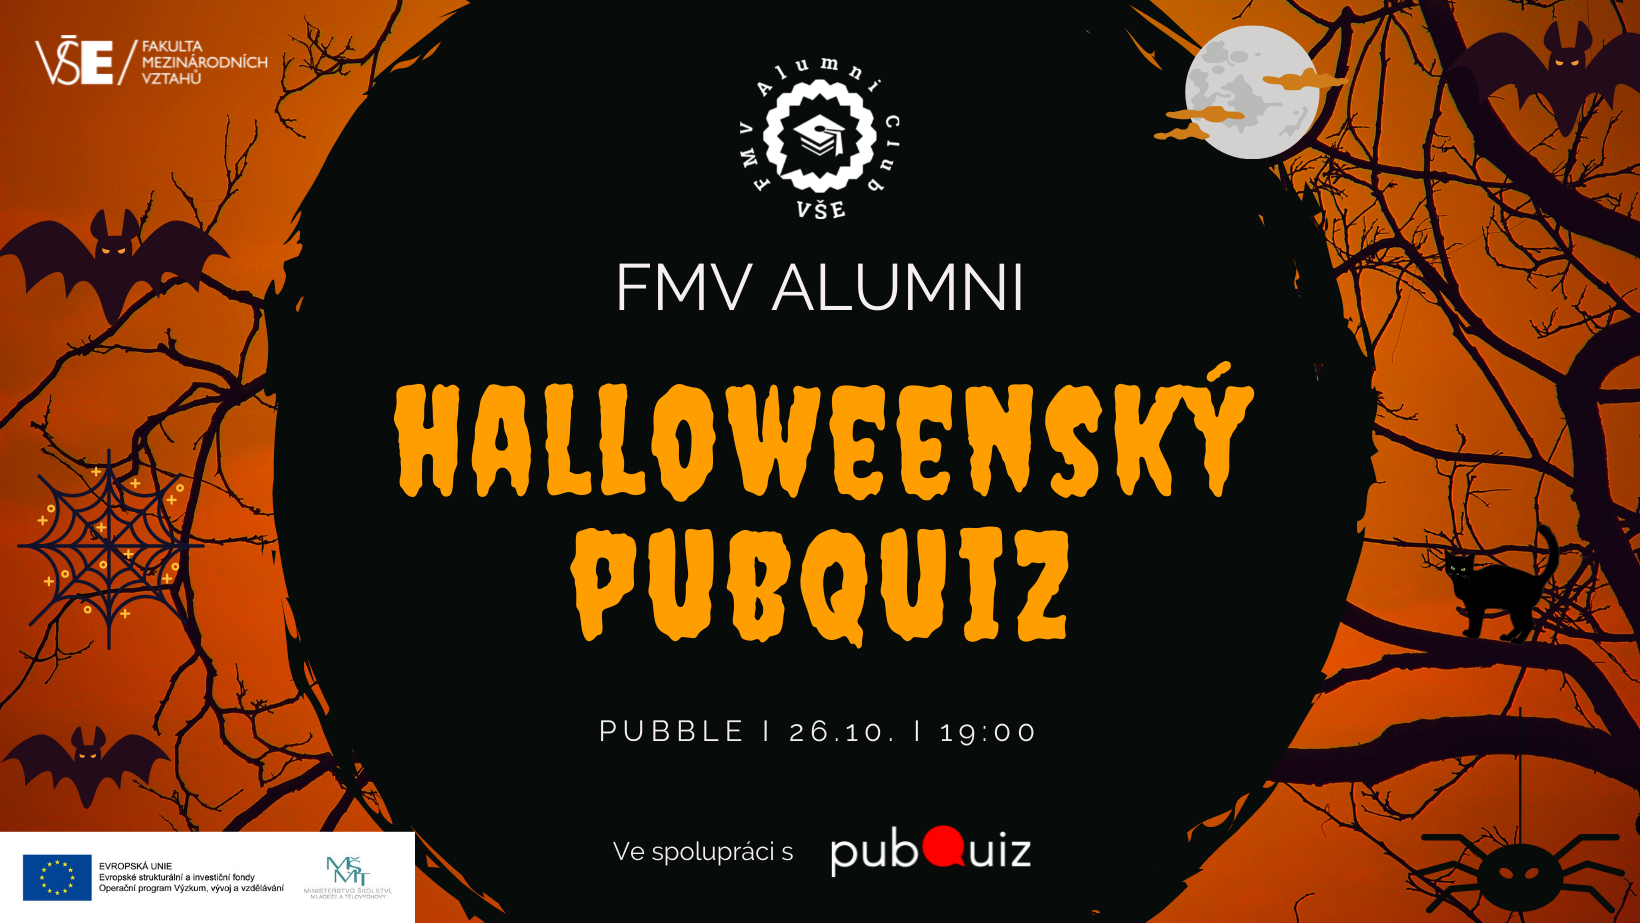 FMV Alumni Club vás zve na Halloweenský PubQuiz! /26.10./